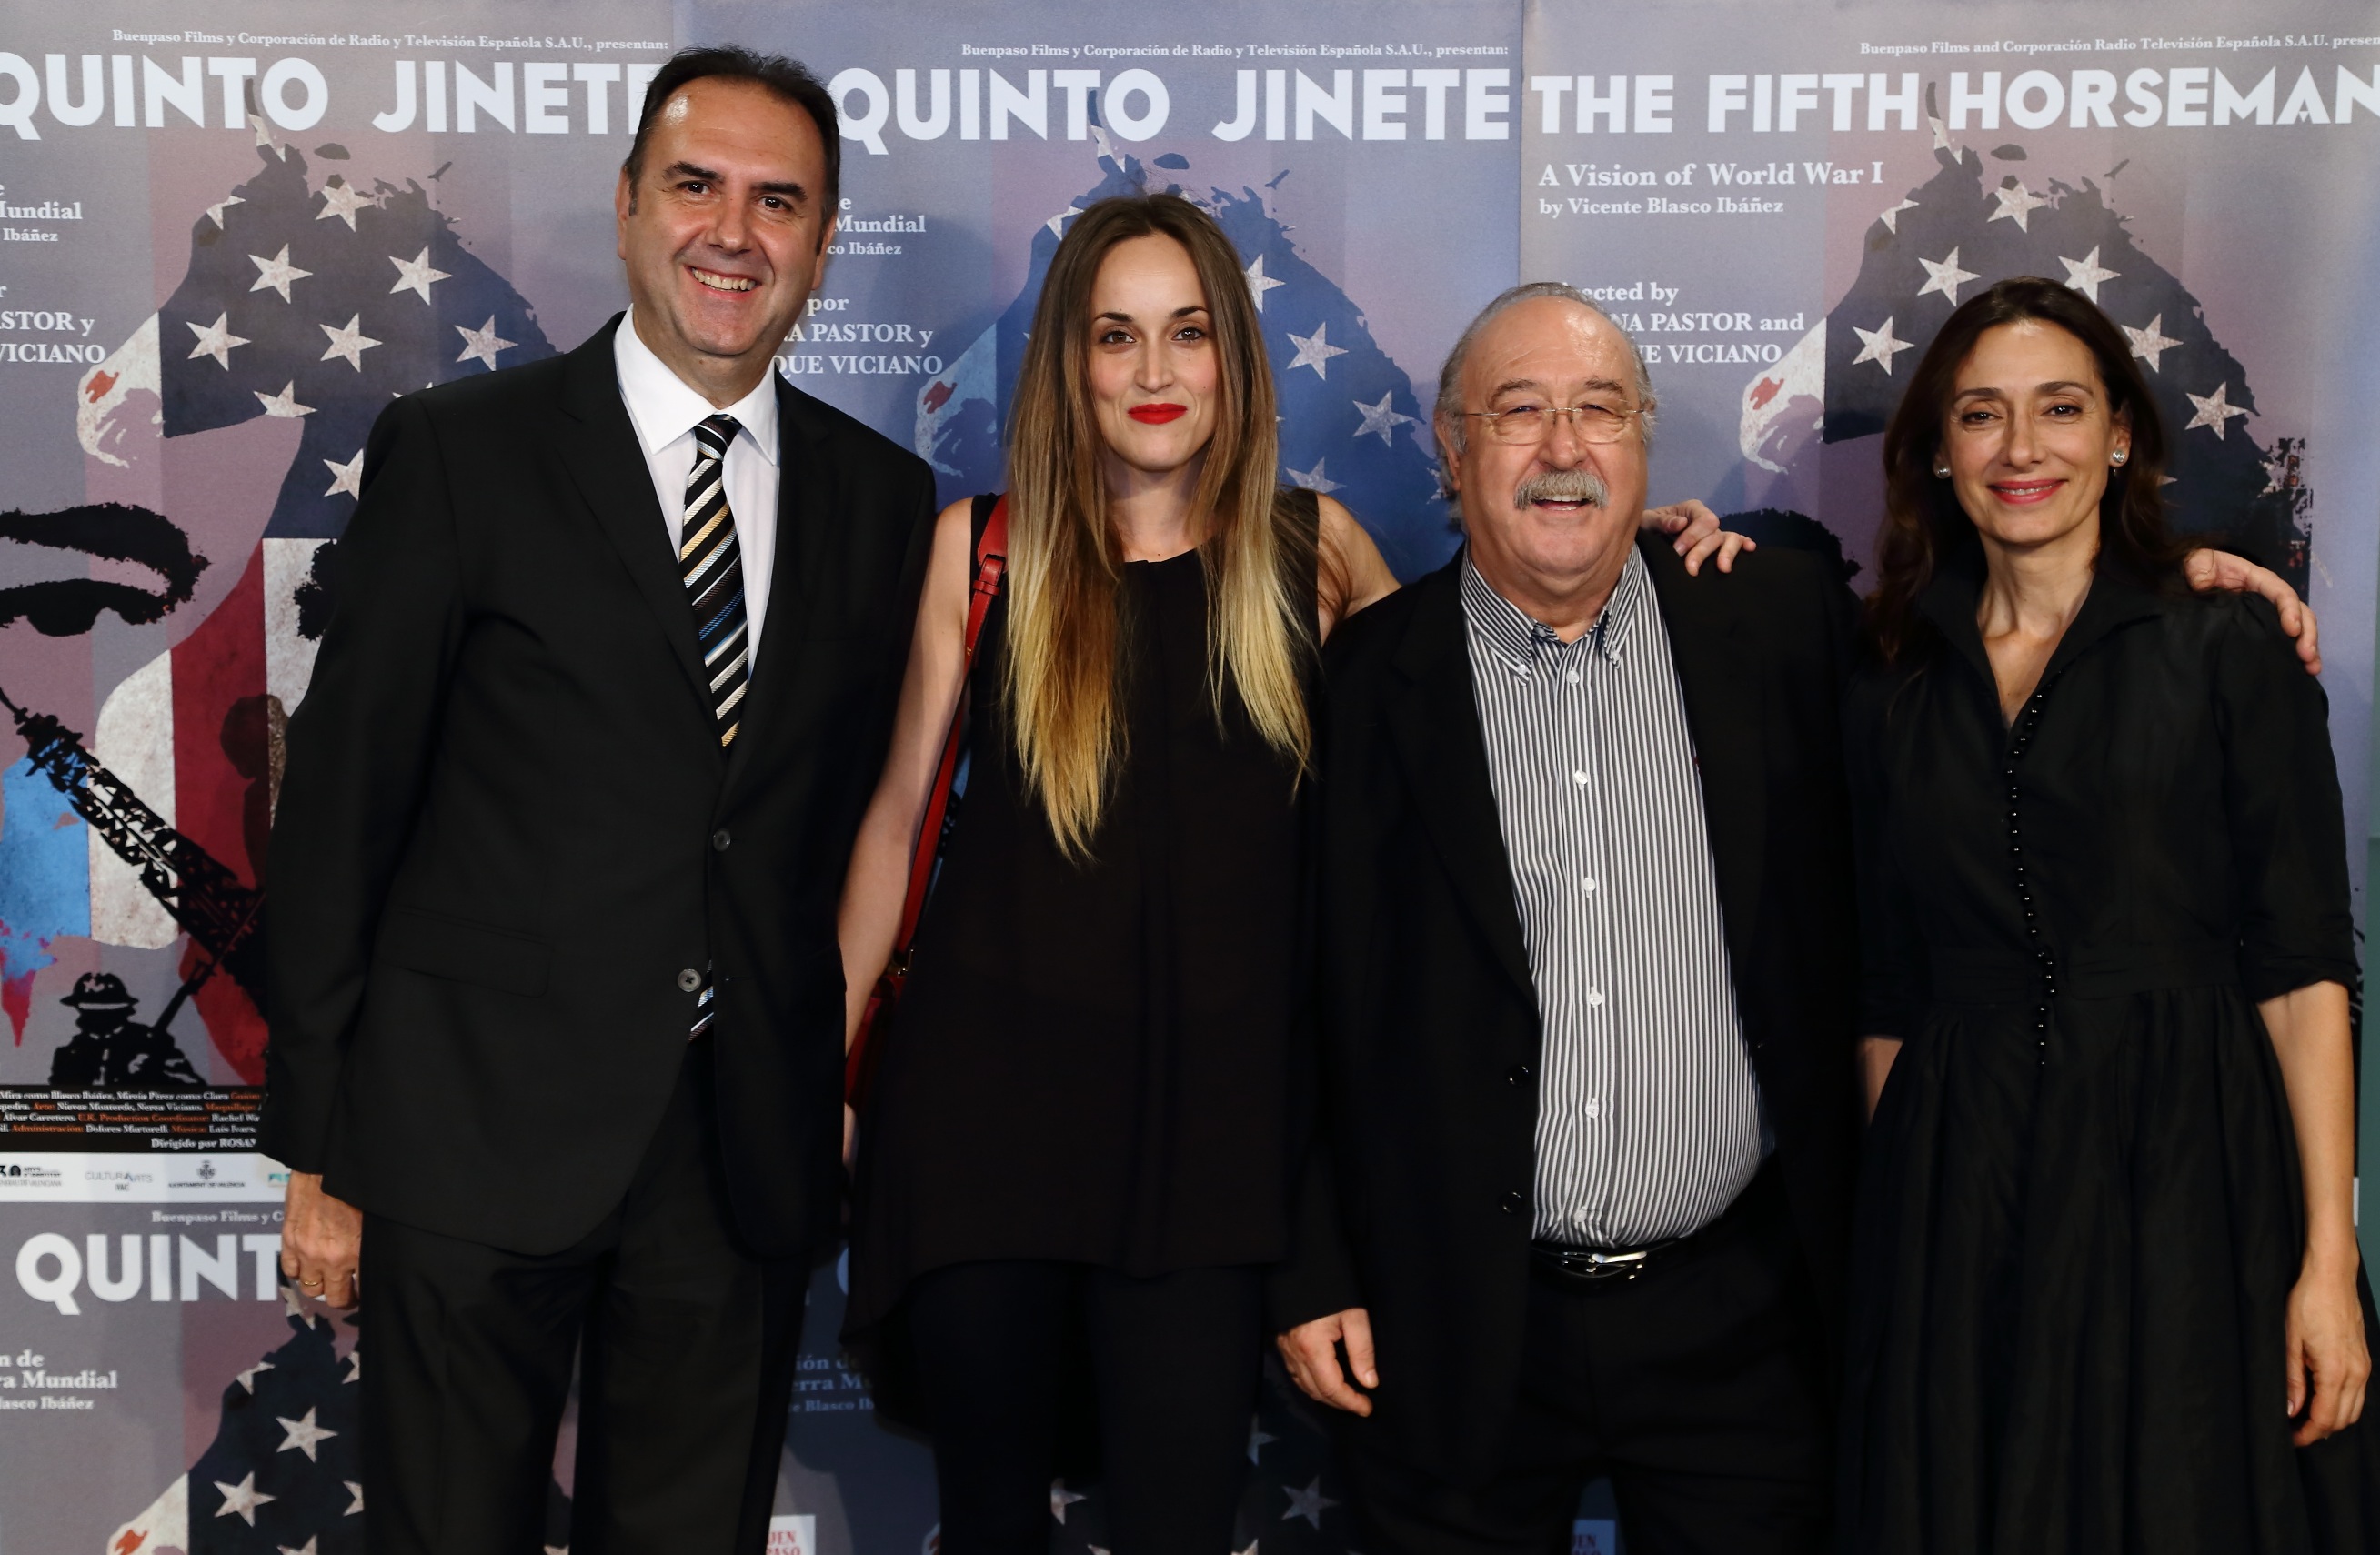 Enrique Viciano, Mireia Pérez, Juli Mira y Rosana Pastor, premiere The Fifth Horseman